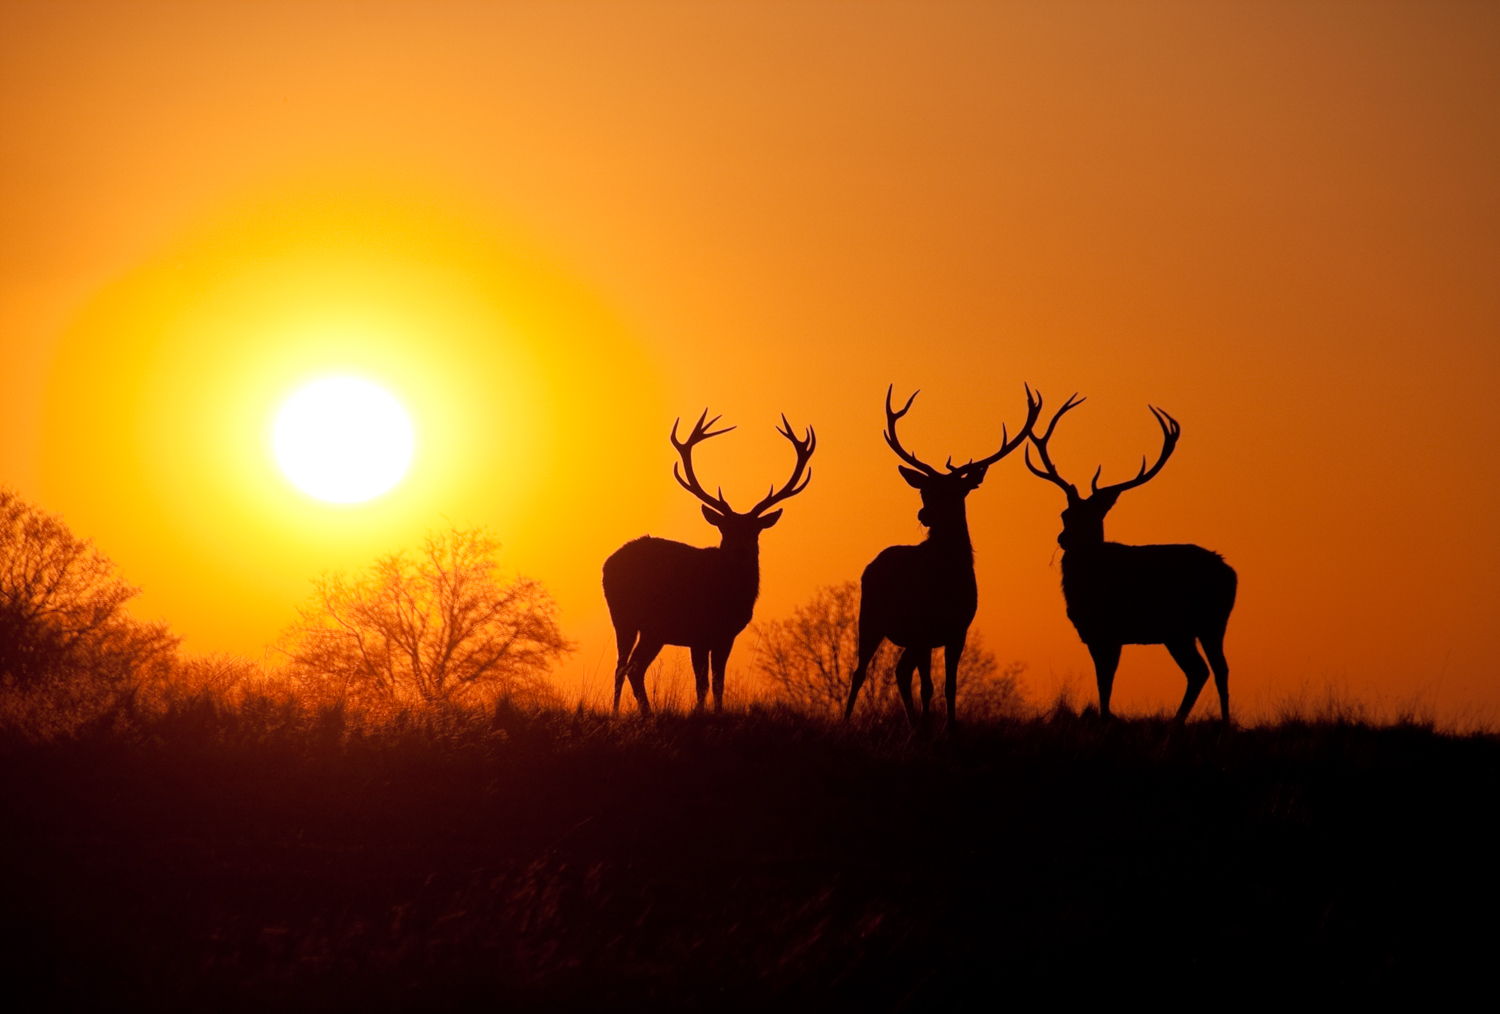 Deer+at+Sunset+2.jpg